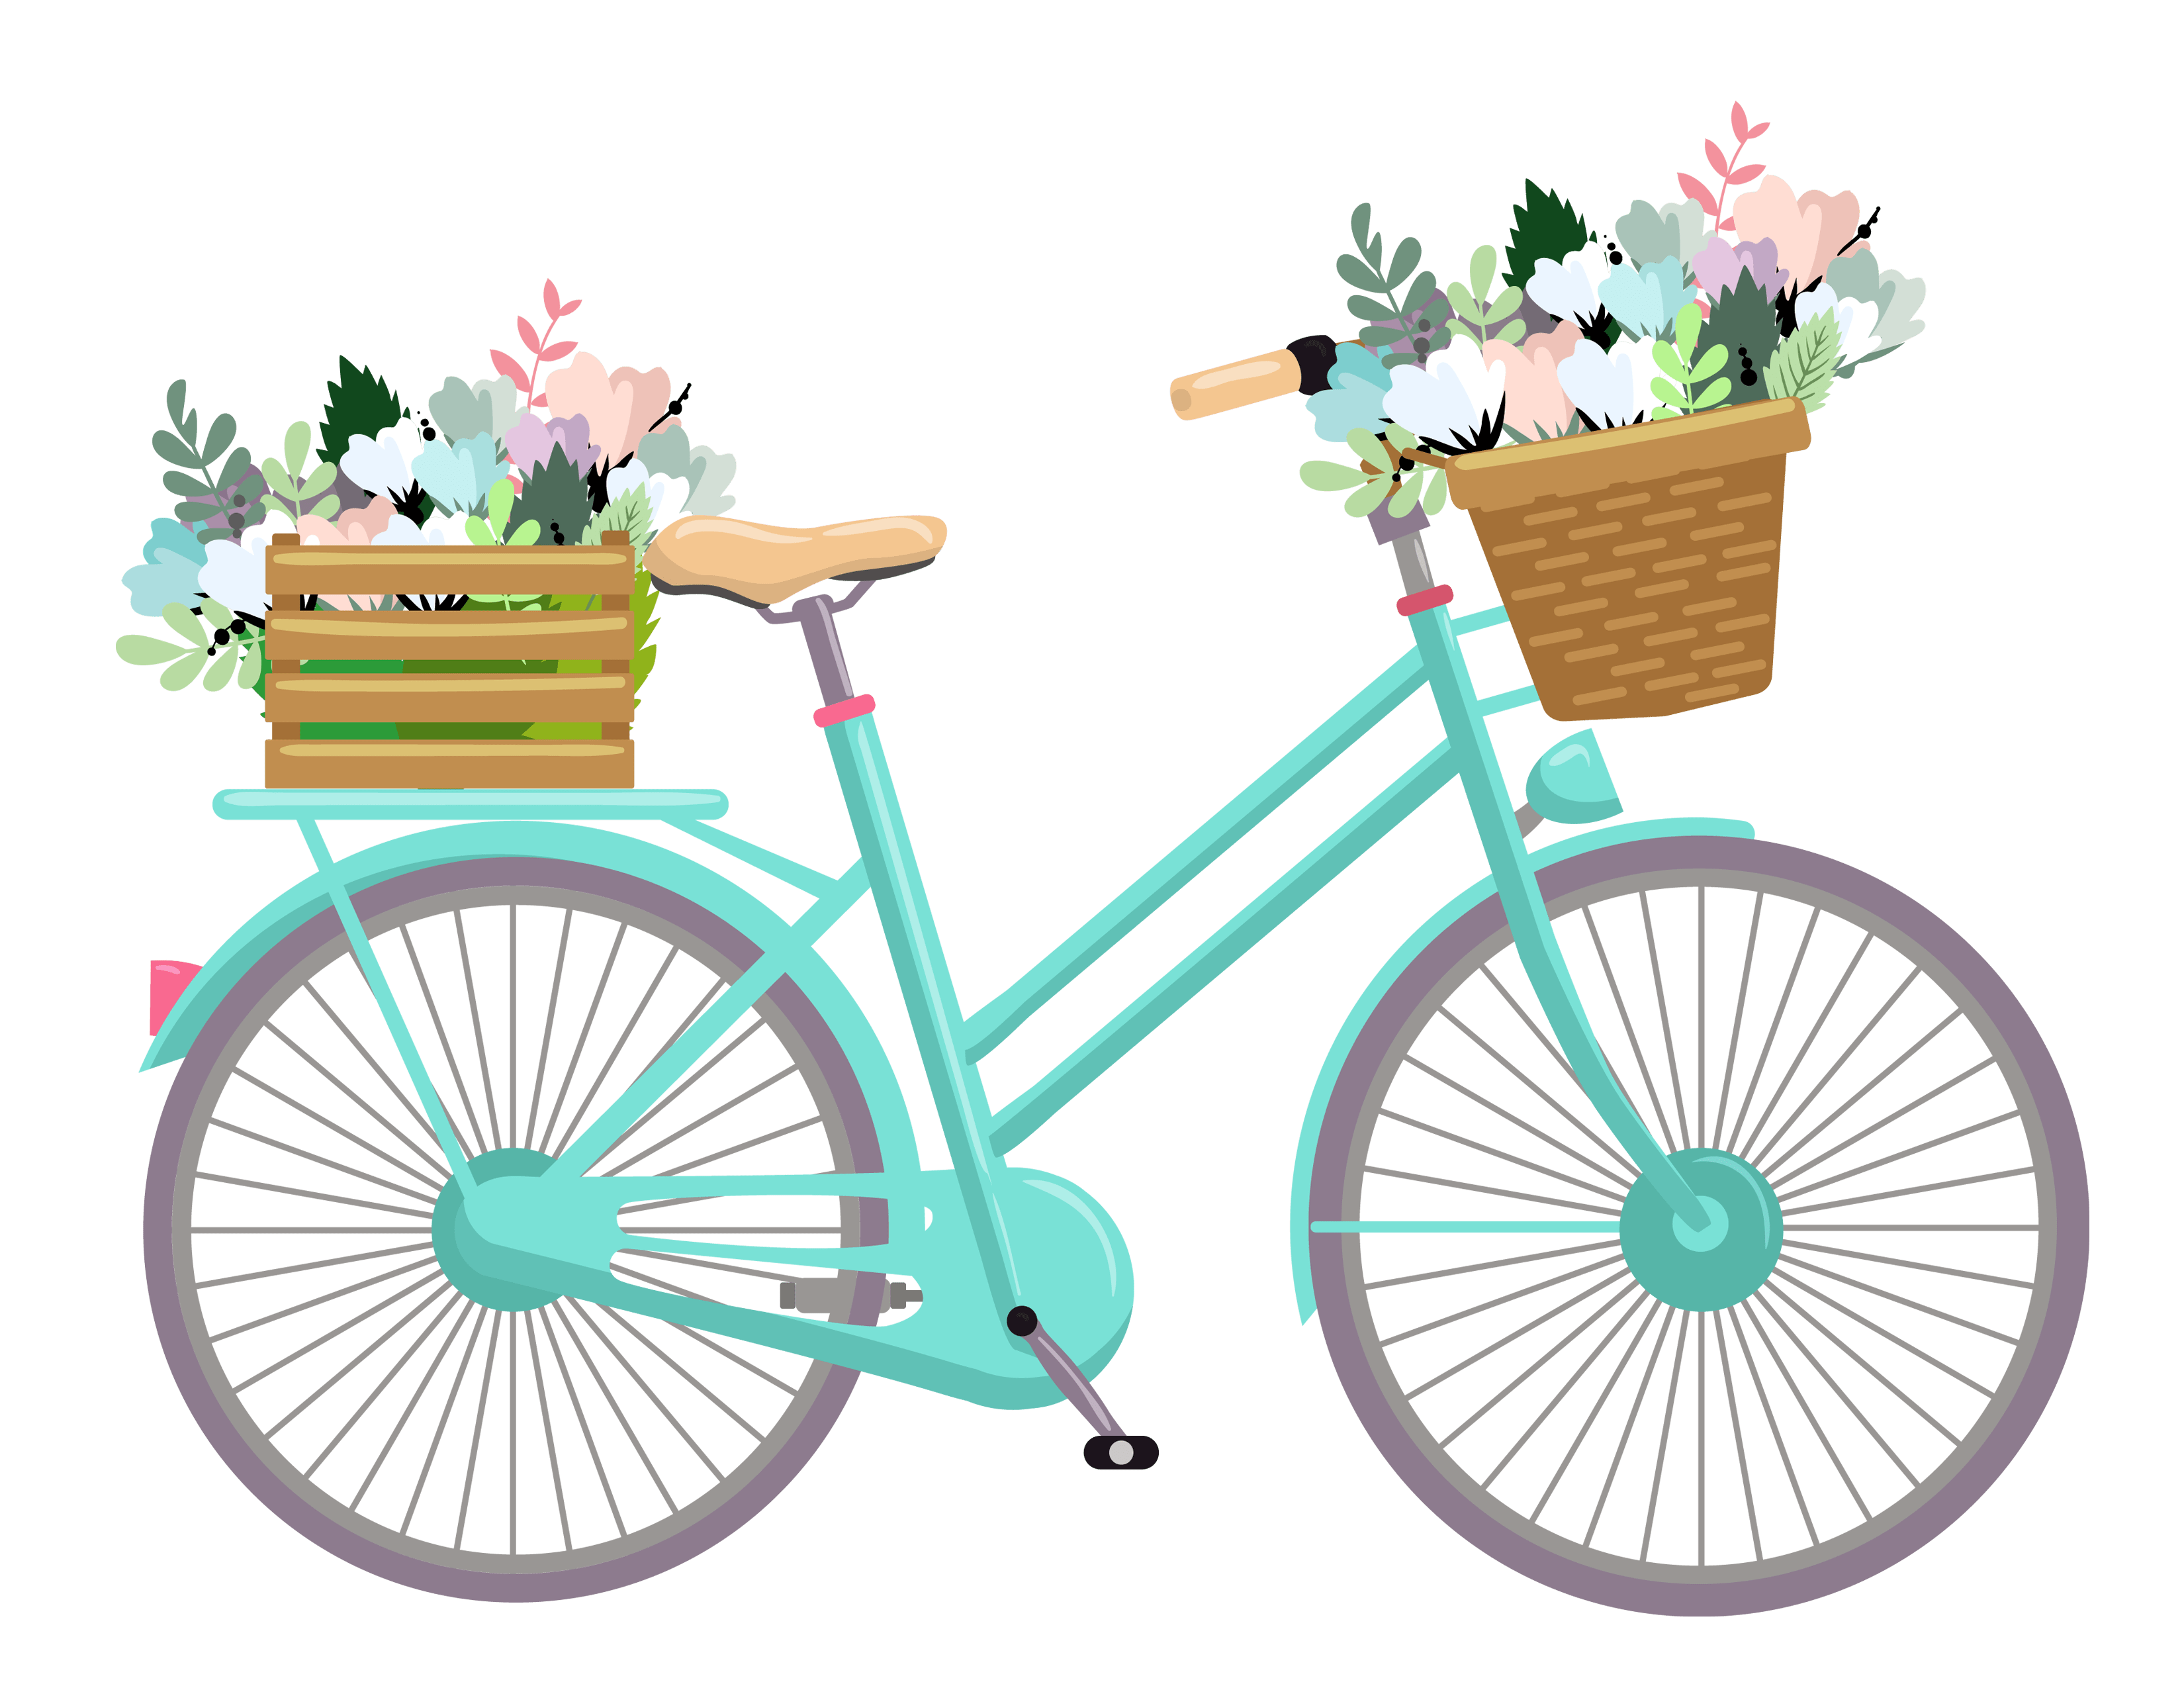 Bike with flowers.